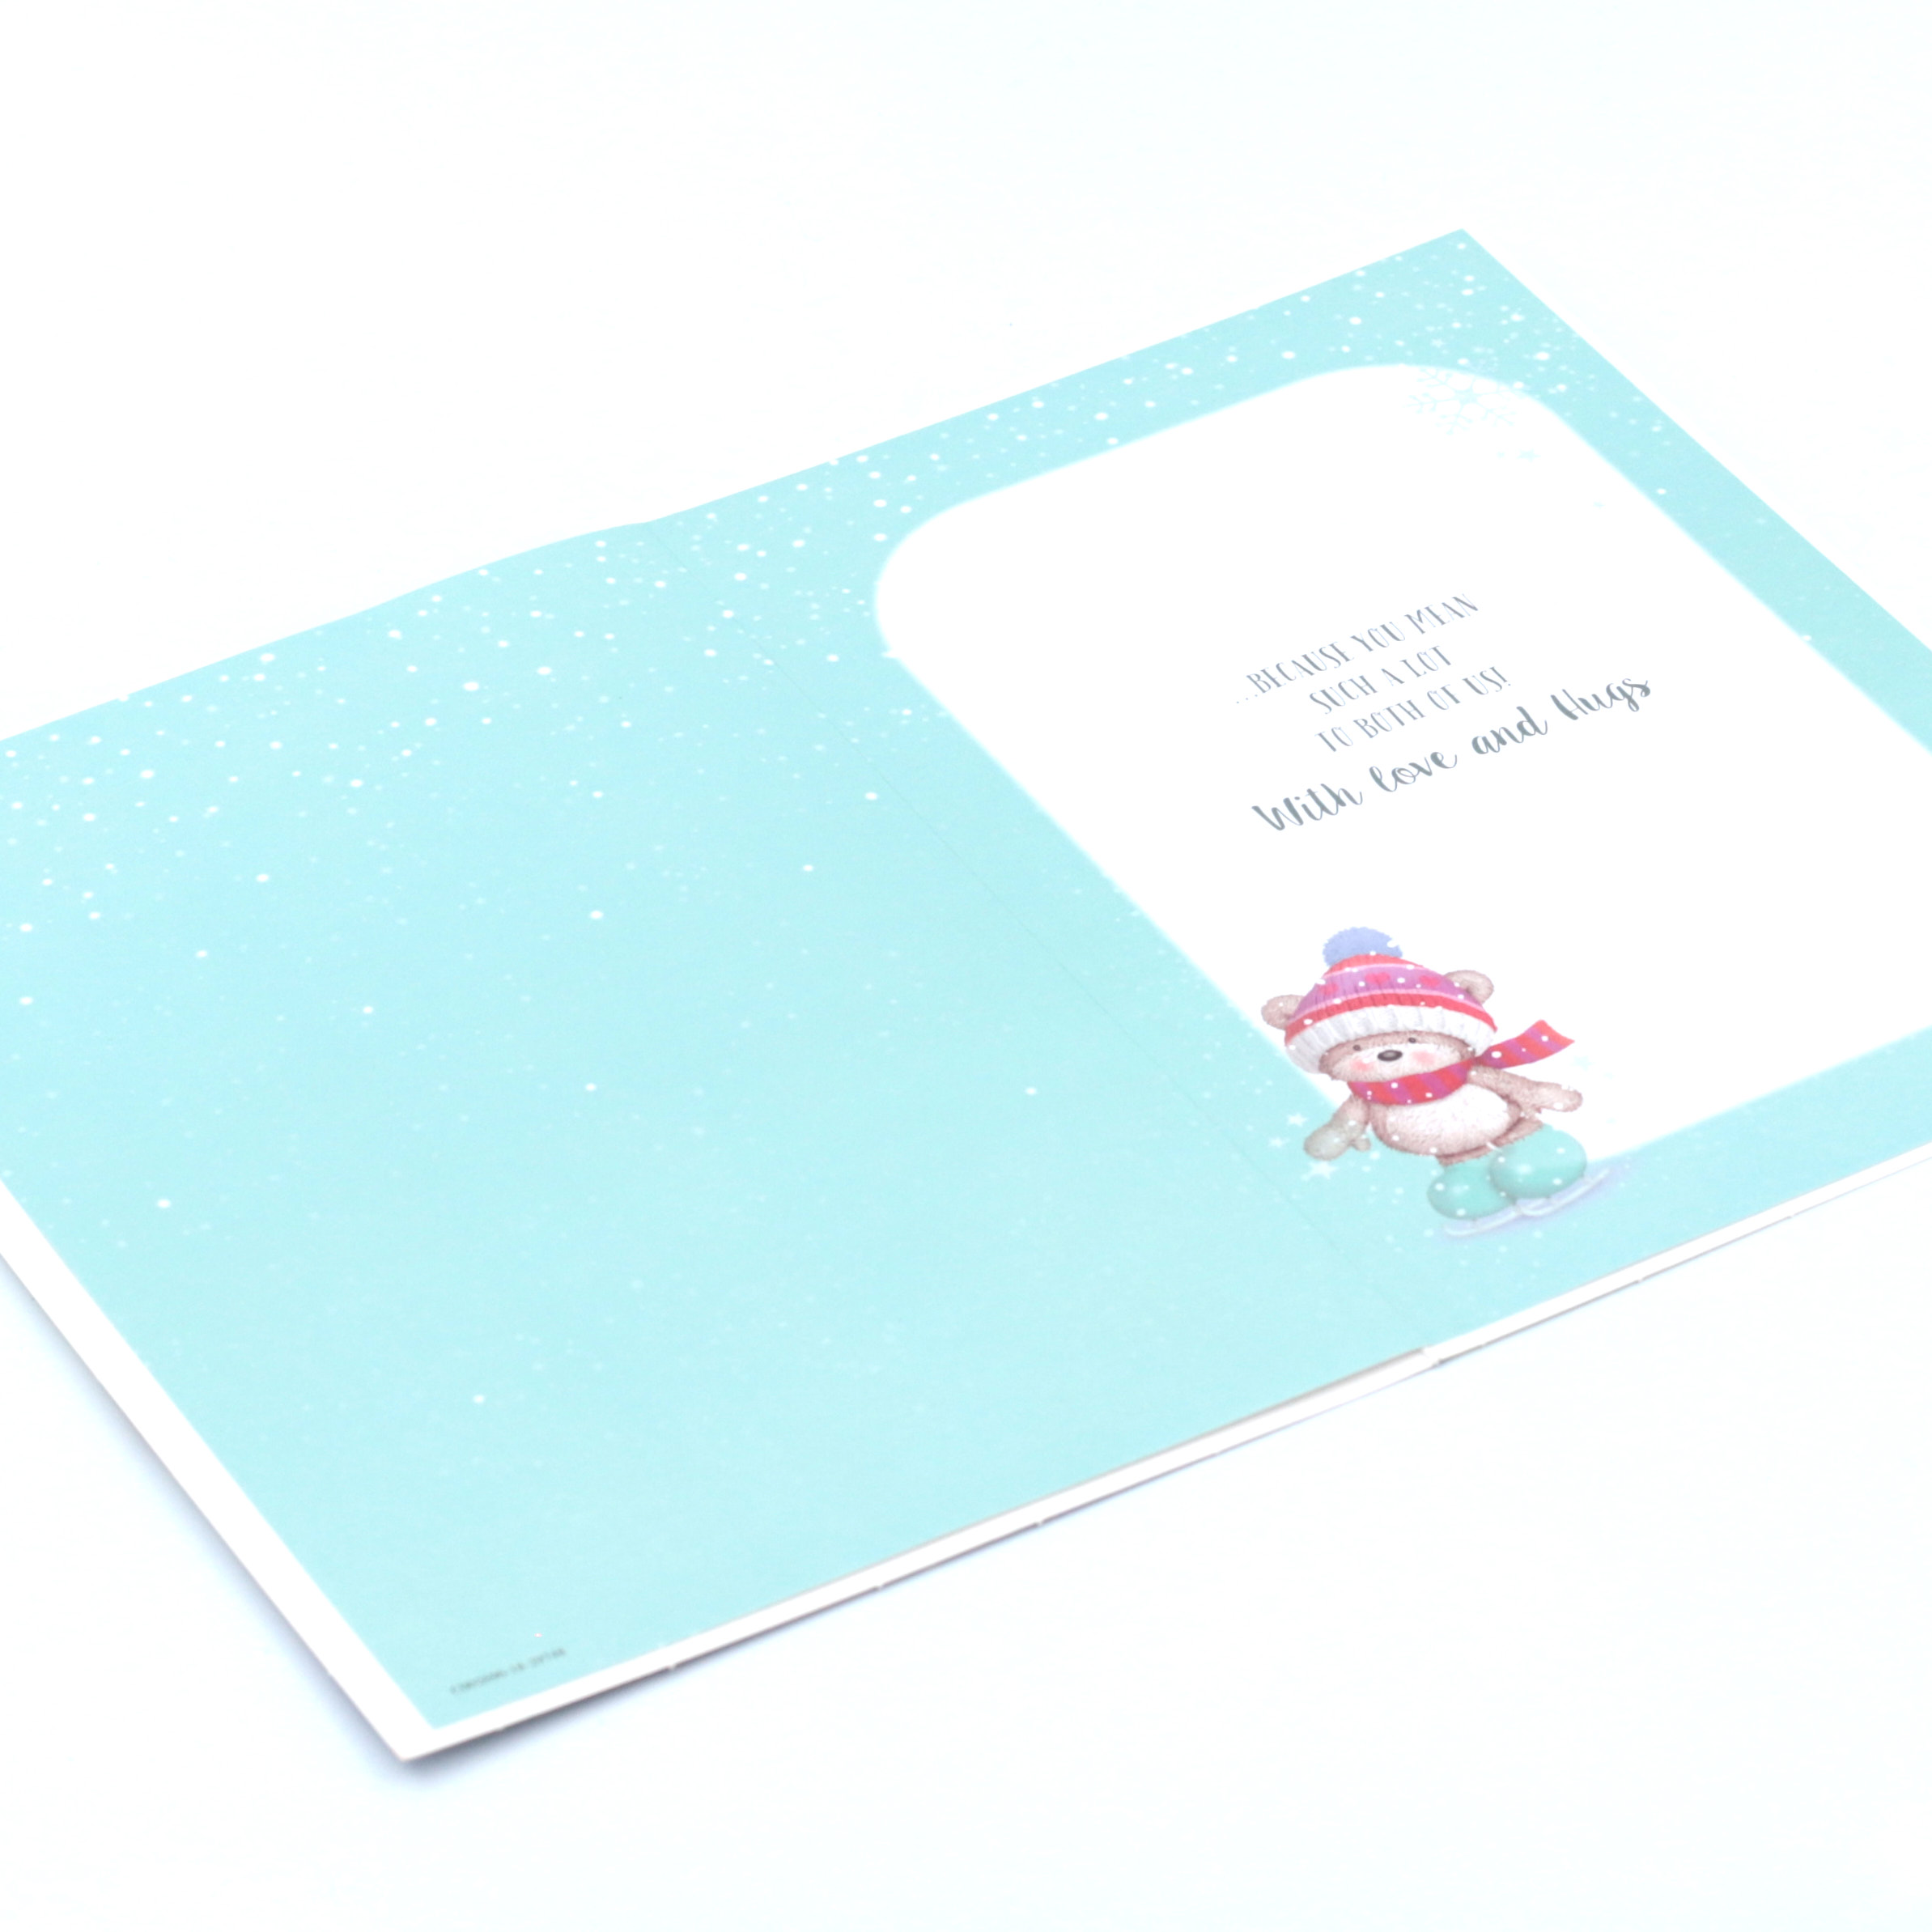 Hugs Bear Christmas Card - From Both Of Us, Cute Bears Ice Skating